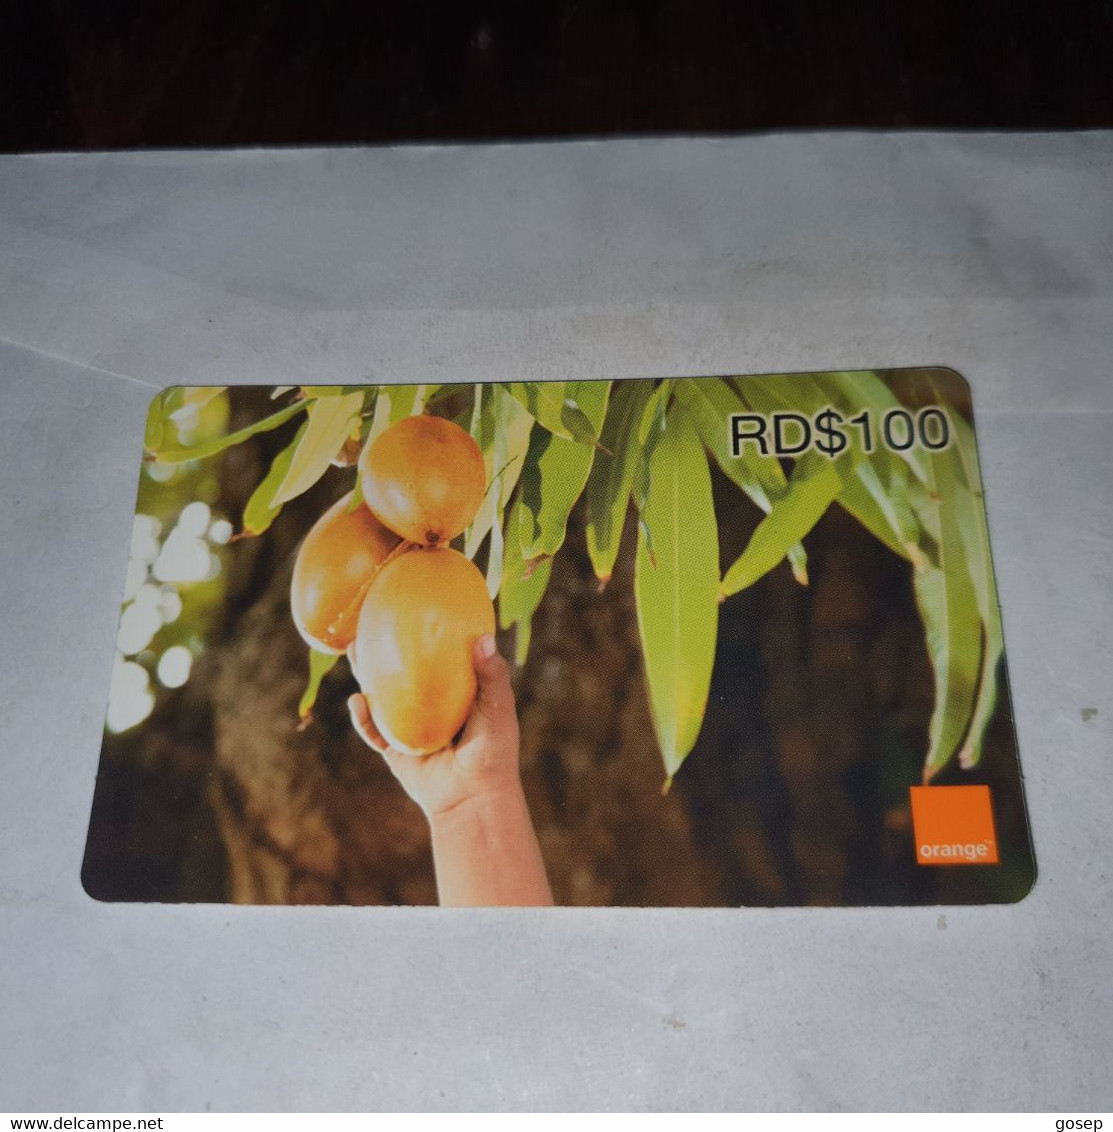 Dominicana-(orange-29rd$100)-(2530-2756-3955-99)-three Mango-(37)-(31.12.2010)-used Card+1card Prepiad Free - Dominicana